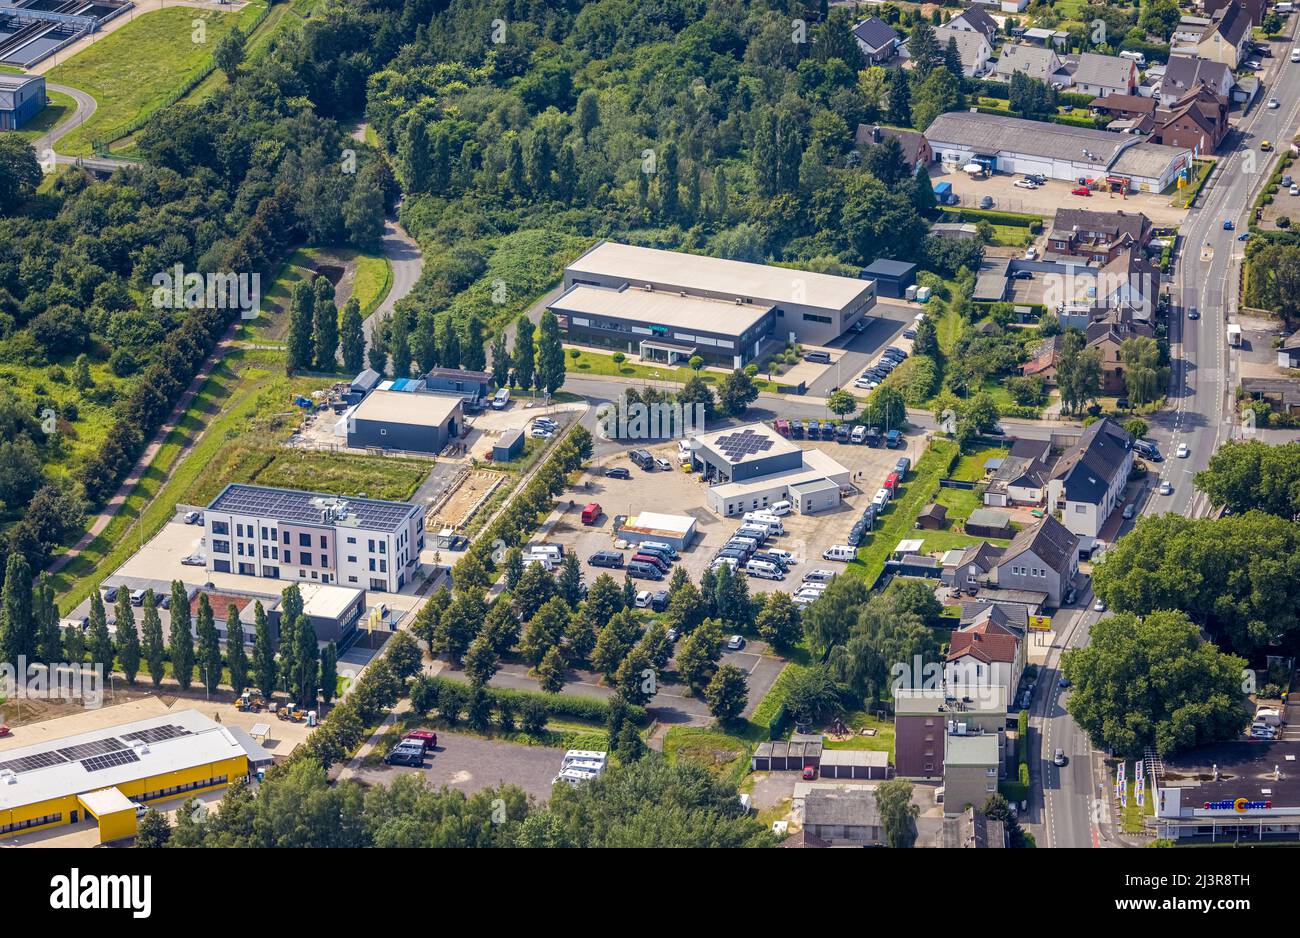 Aerial view, Herbert-Wehner-Straße industrial estate in Kamen, Ruhr region, North Rhine-Westphalia, Germany, Luftbild, Gewerbegebiet Herbert-Wehner-St Stock Photo